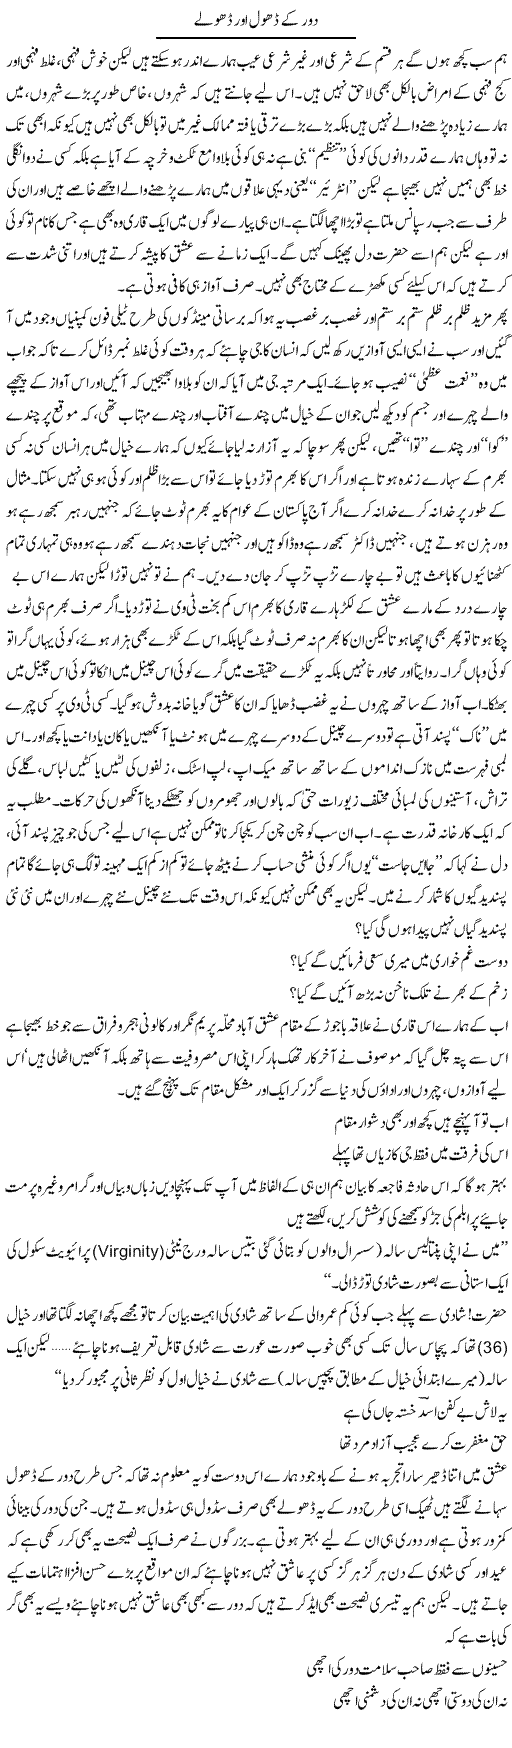 Door Ke Dhol Aor Dholay | Saad Ullah Jan Barq | Daily Urdu Columns